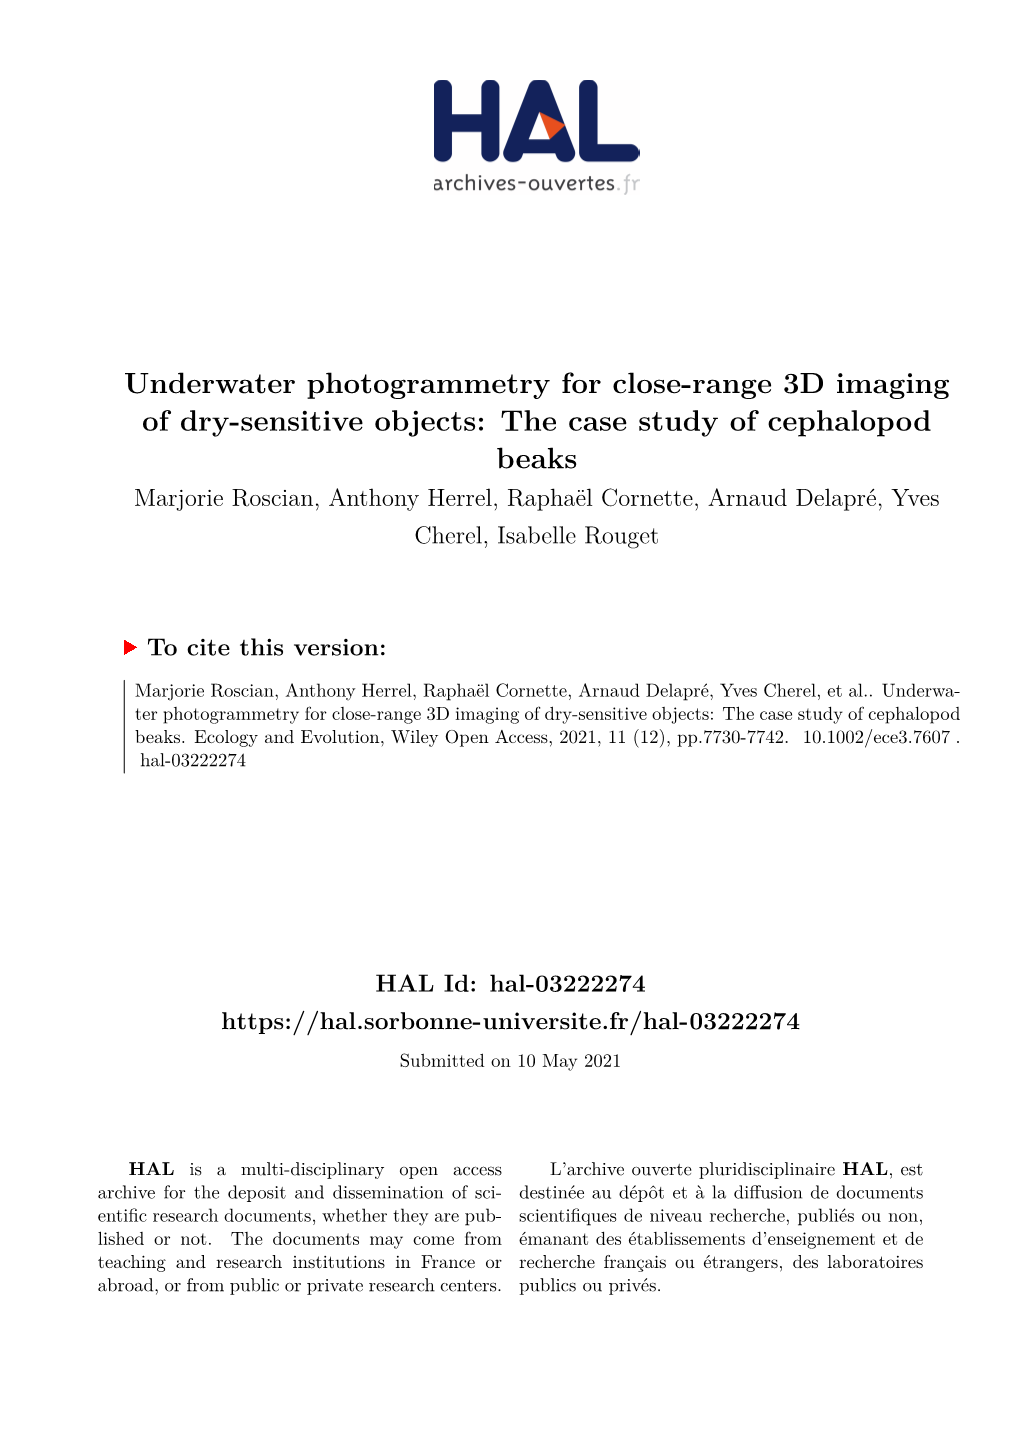 Underwater Photogrammetry for Close-Range 3D Imaging of Dry